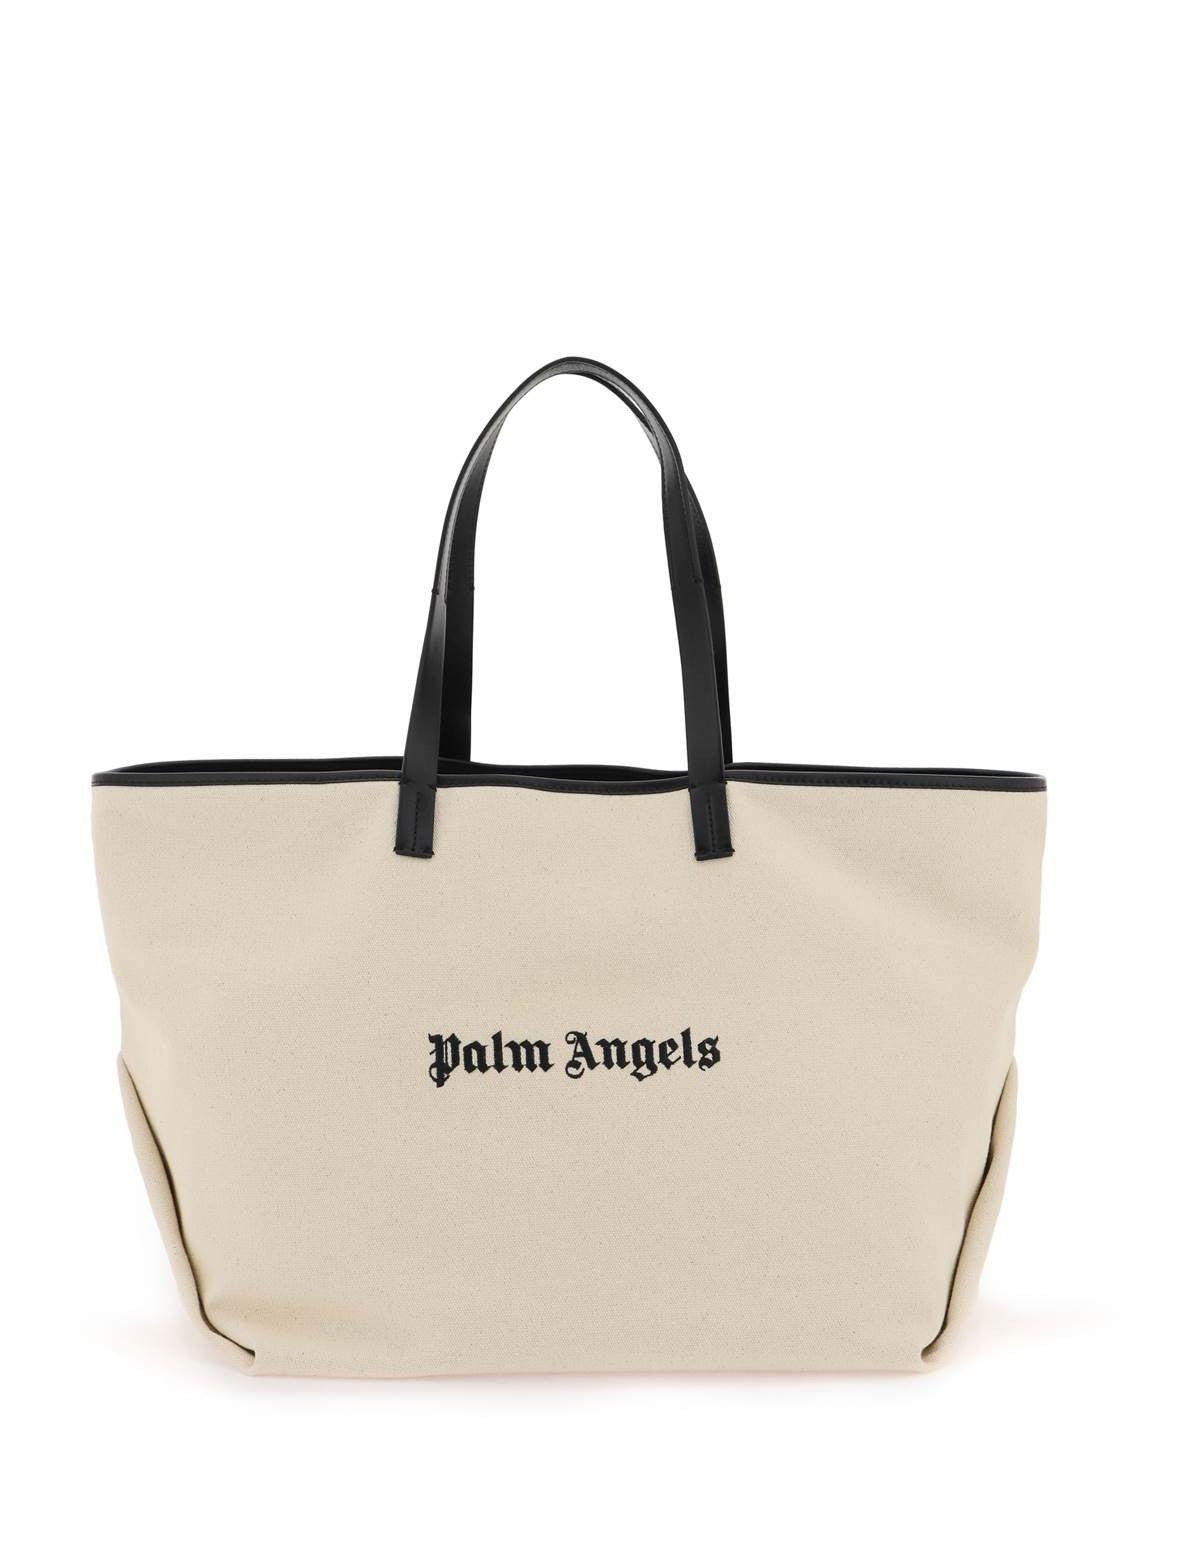 palm-angels-canvas-tote-bag.jpg